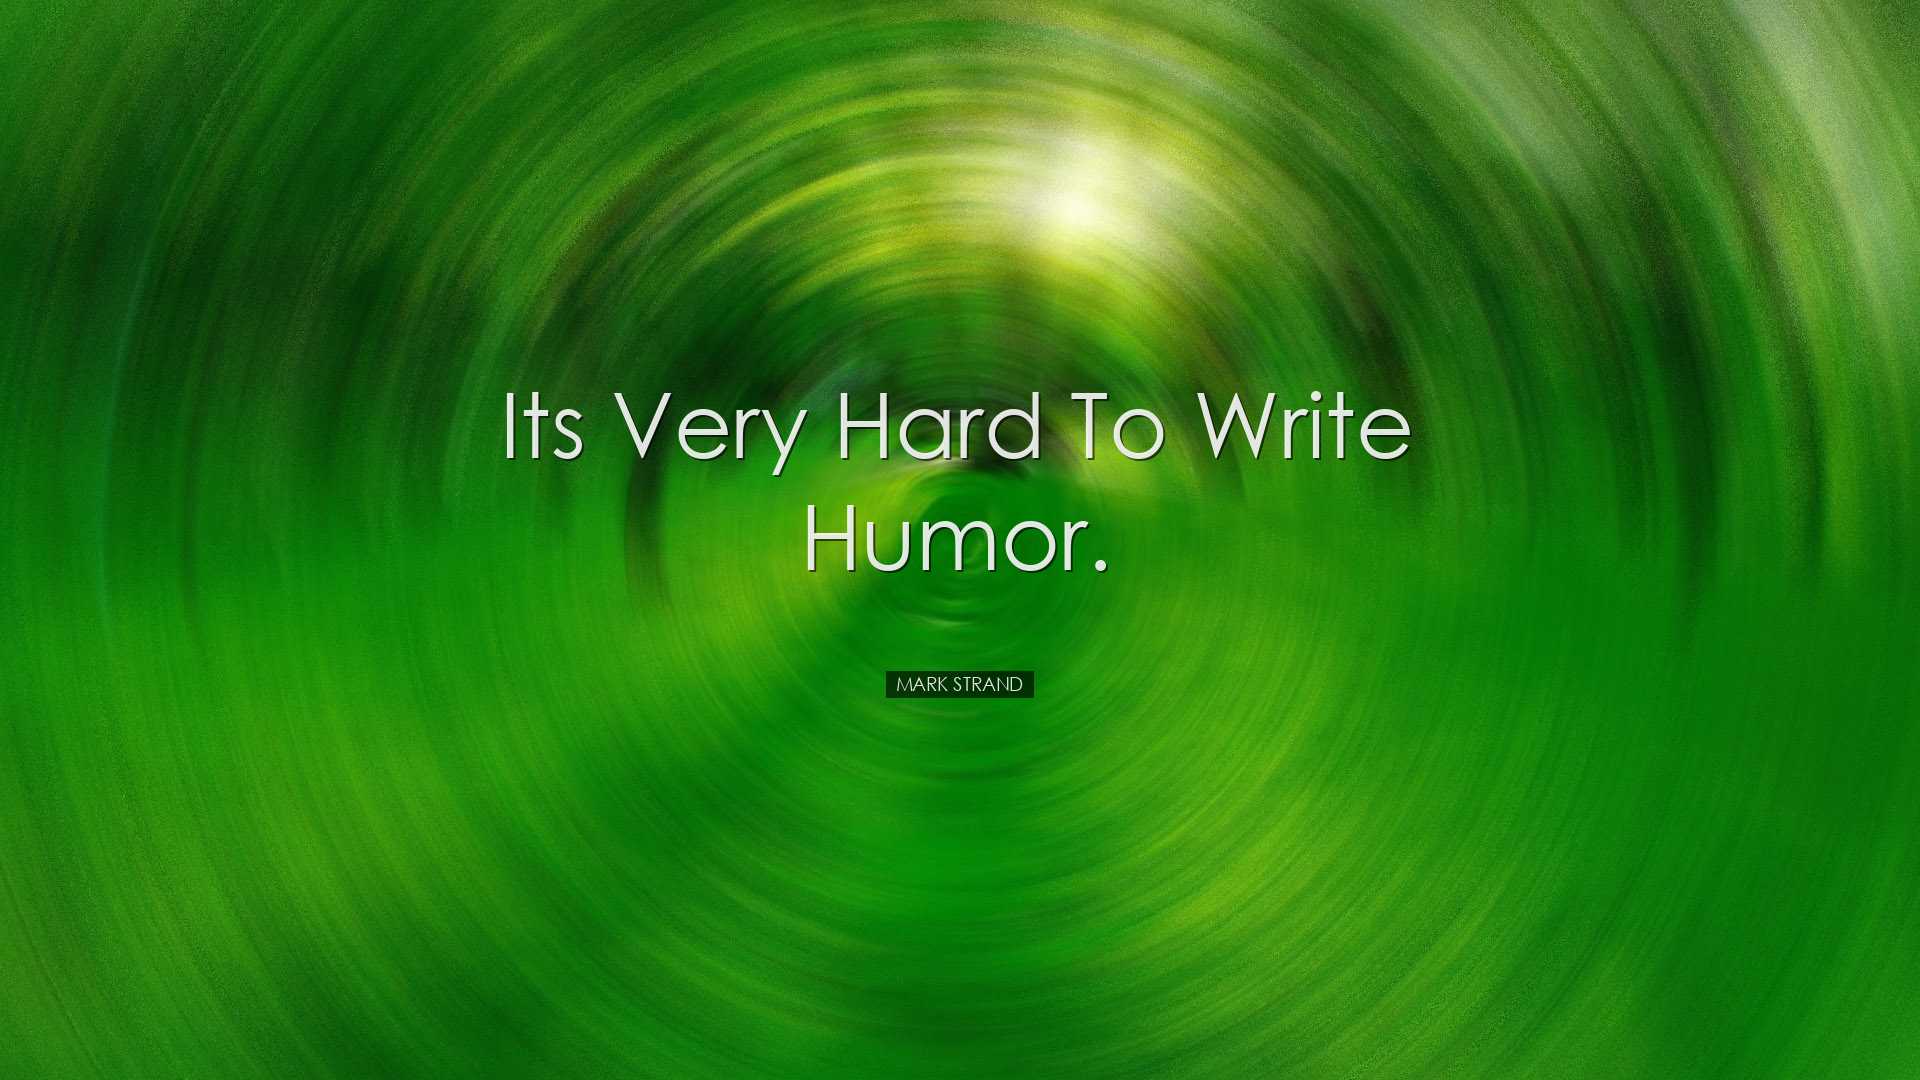 Its very hard to write humor. - Mark Strand